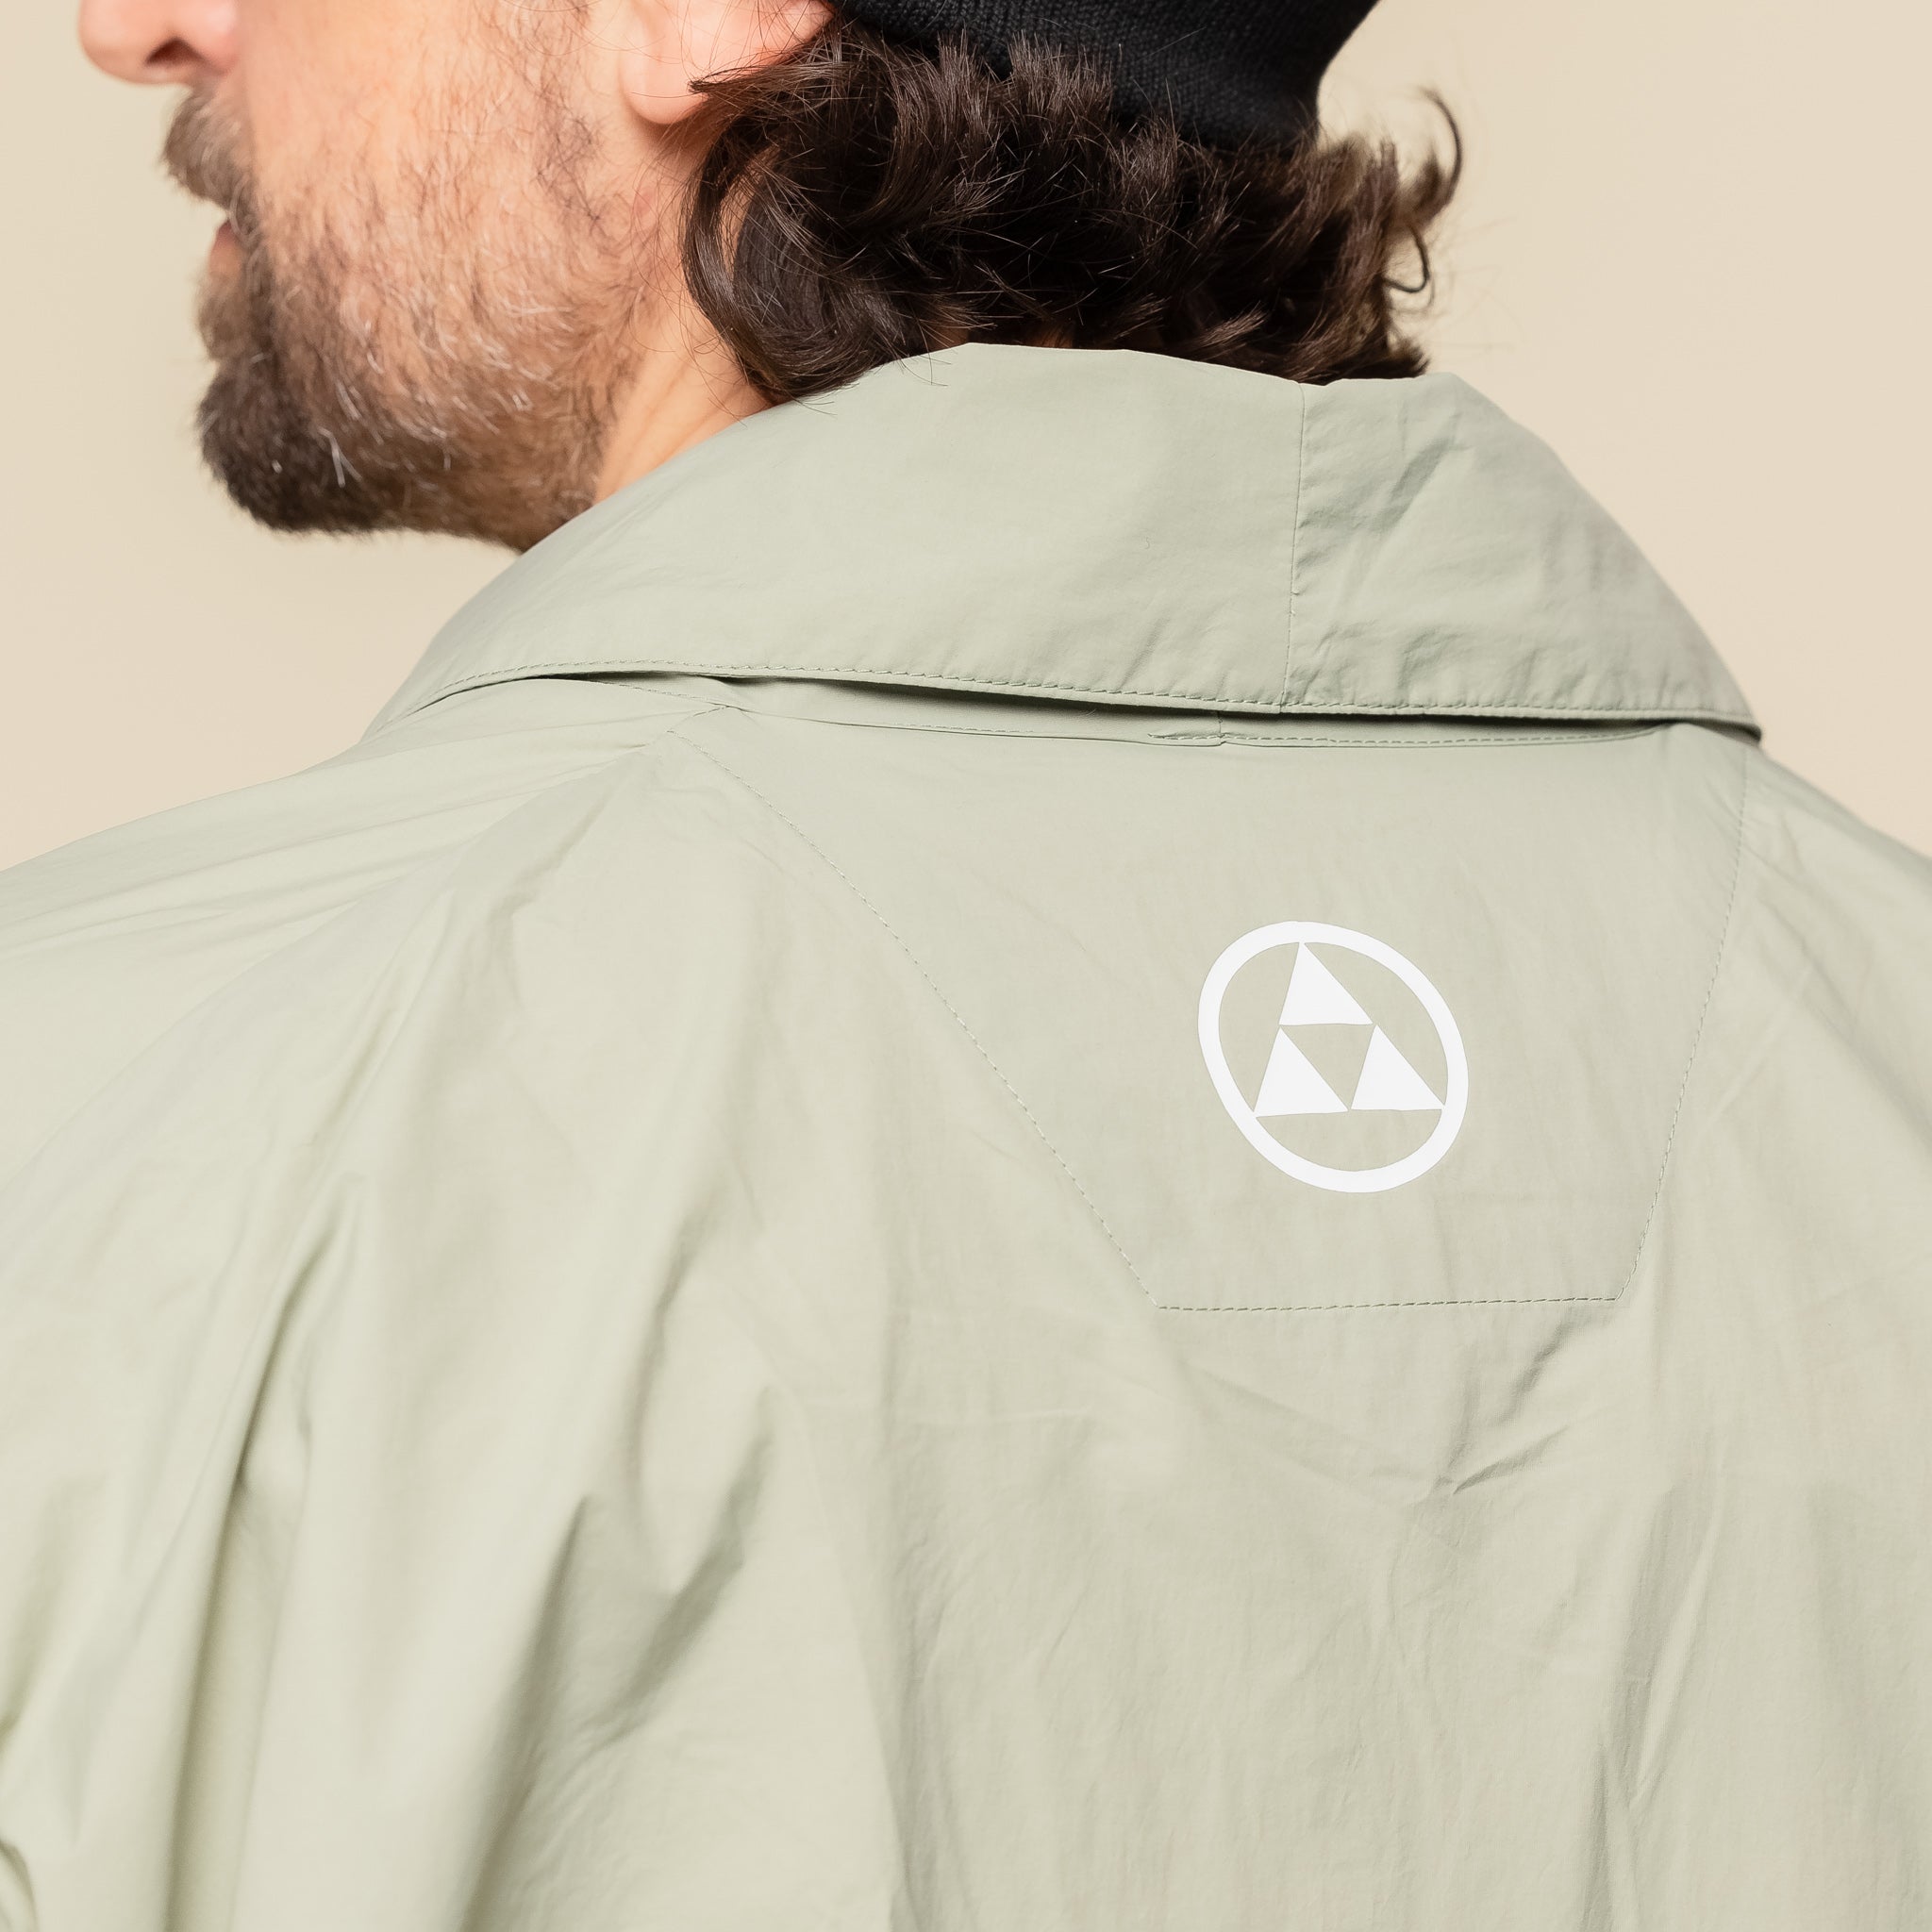 CMF Comfy Outdoor Garment - Haori Coat - Light Khaki